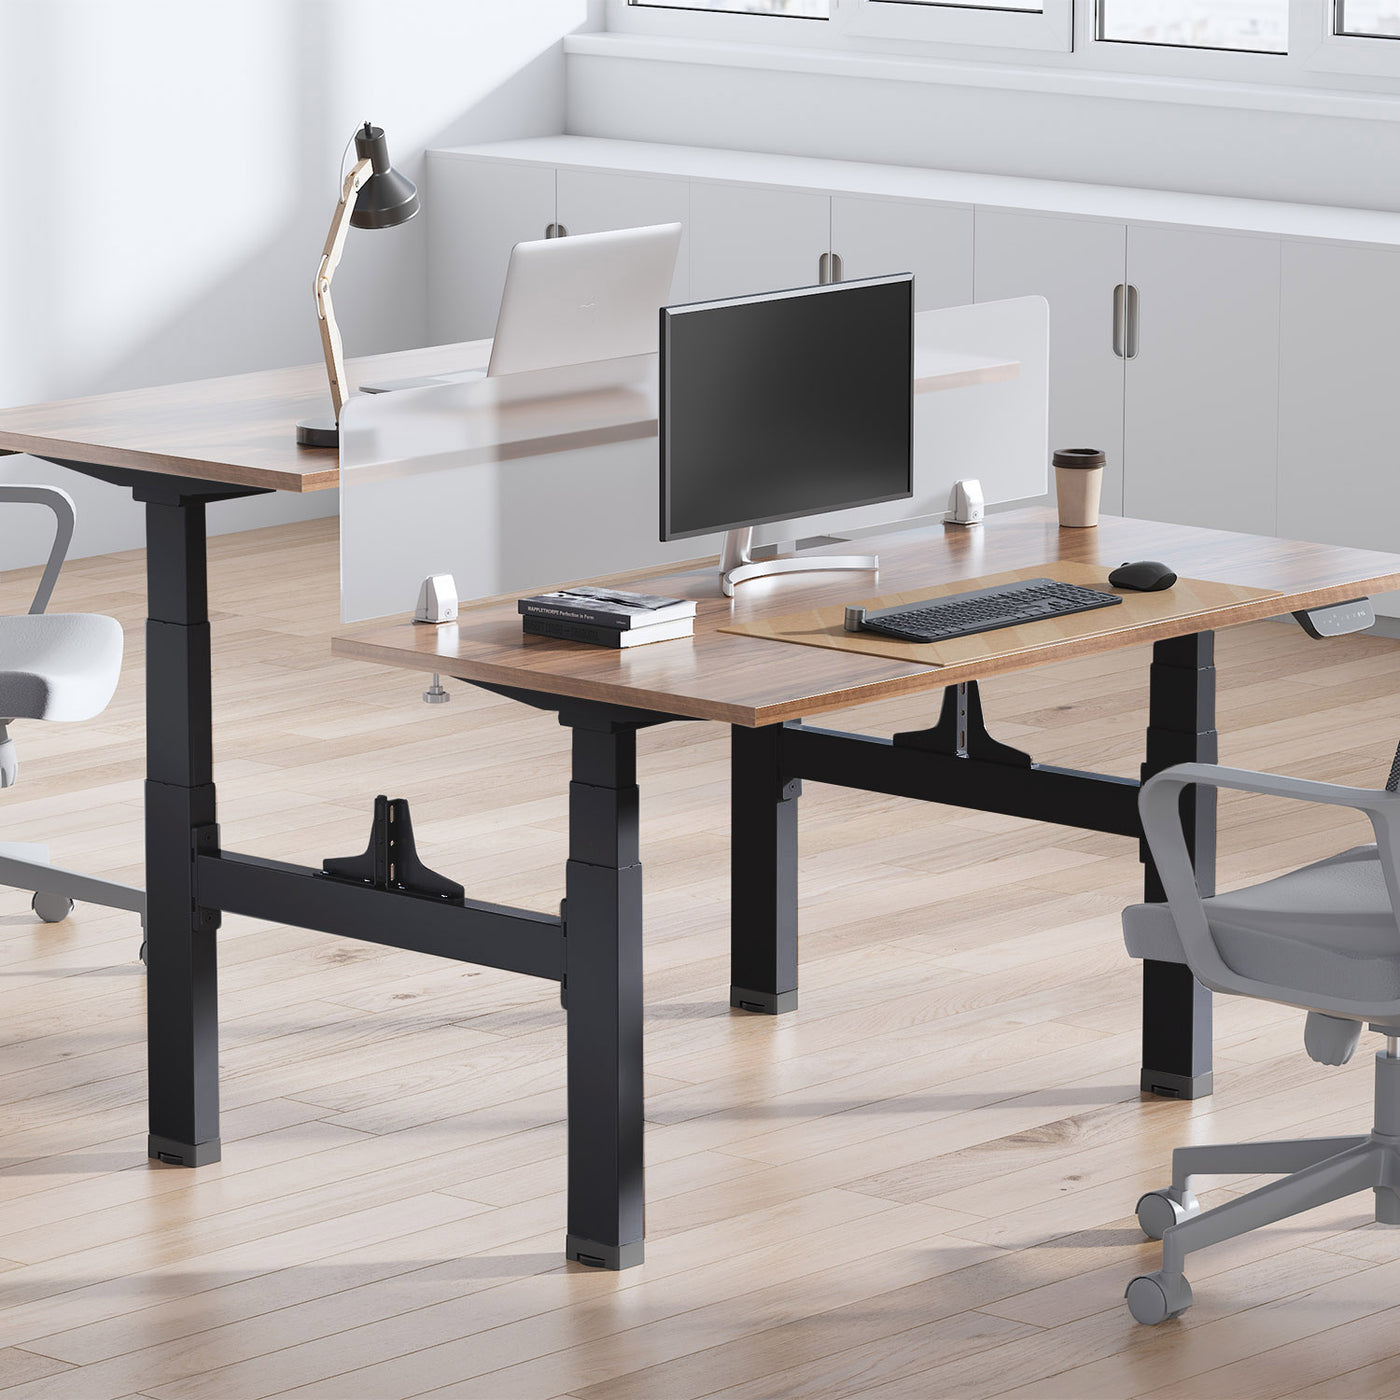 Ergo Office ER-404B Electric Double Height Adjustable Standing/Sitting Desk Frame without Desk Tops Black